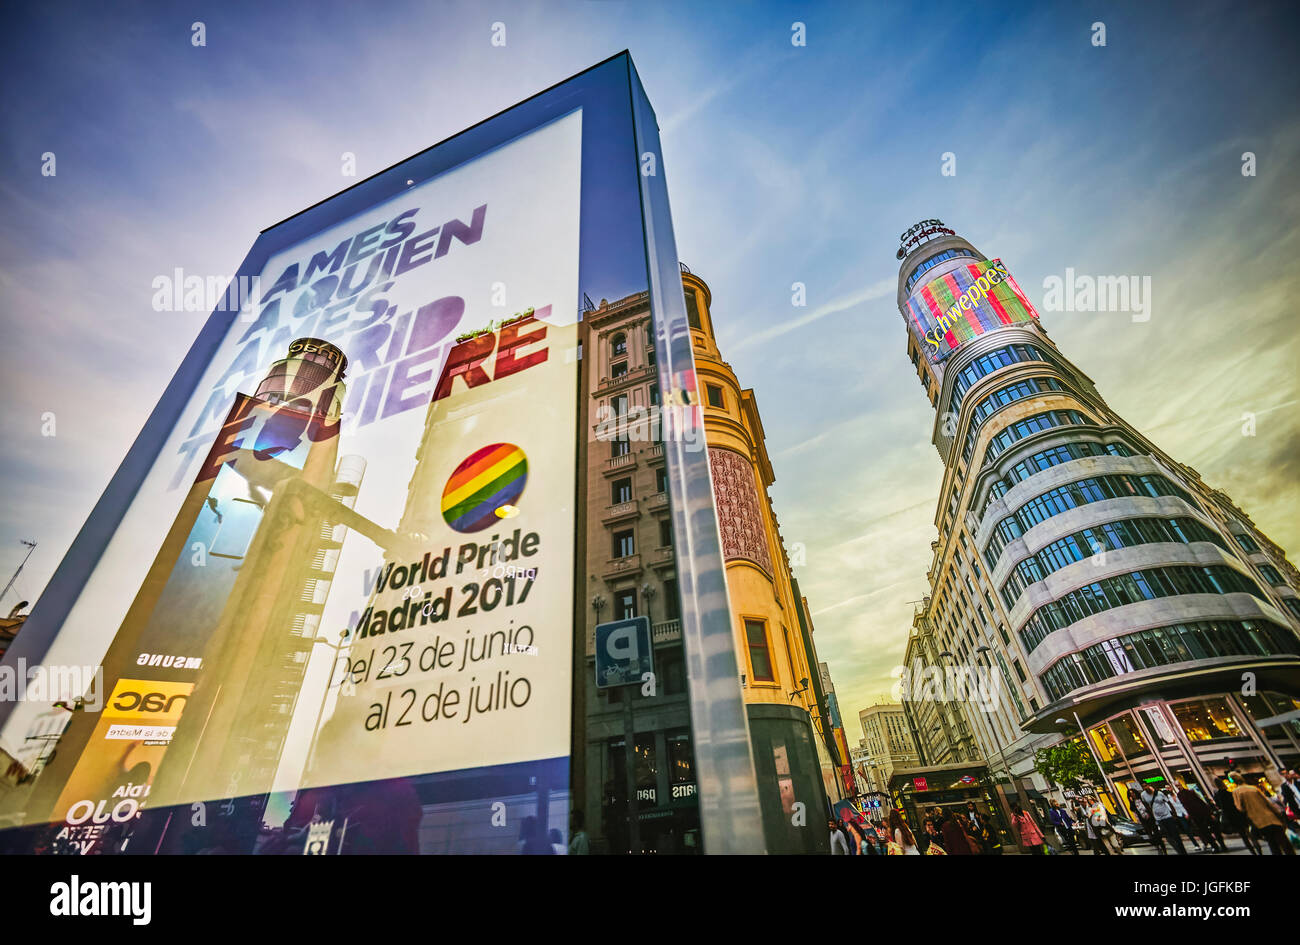 World Pride 2017 Madrid signe à Callao Square. Madrid. L'Espagne. Banque D'Images